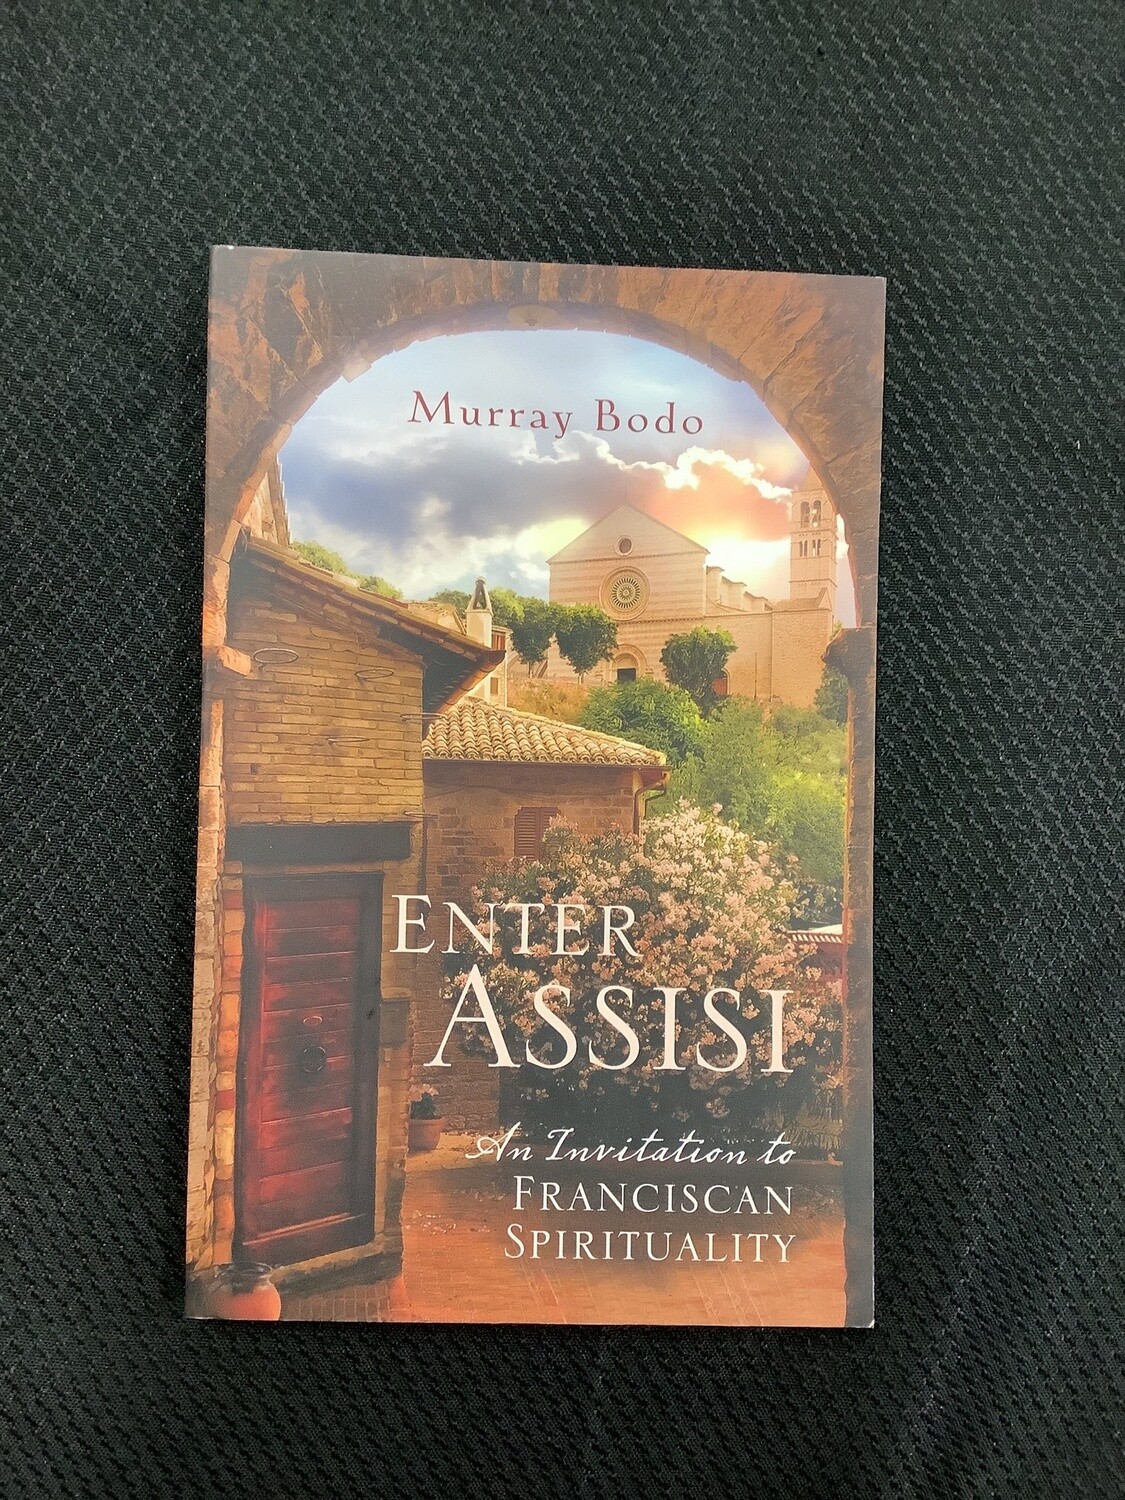 Enter Assisi An Invitation to Franciscan Spirituality - Murray Bodo